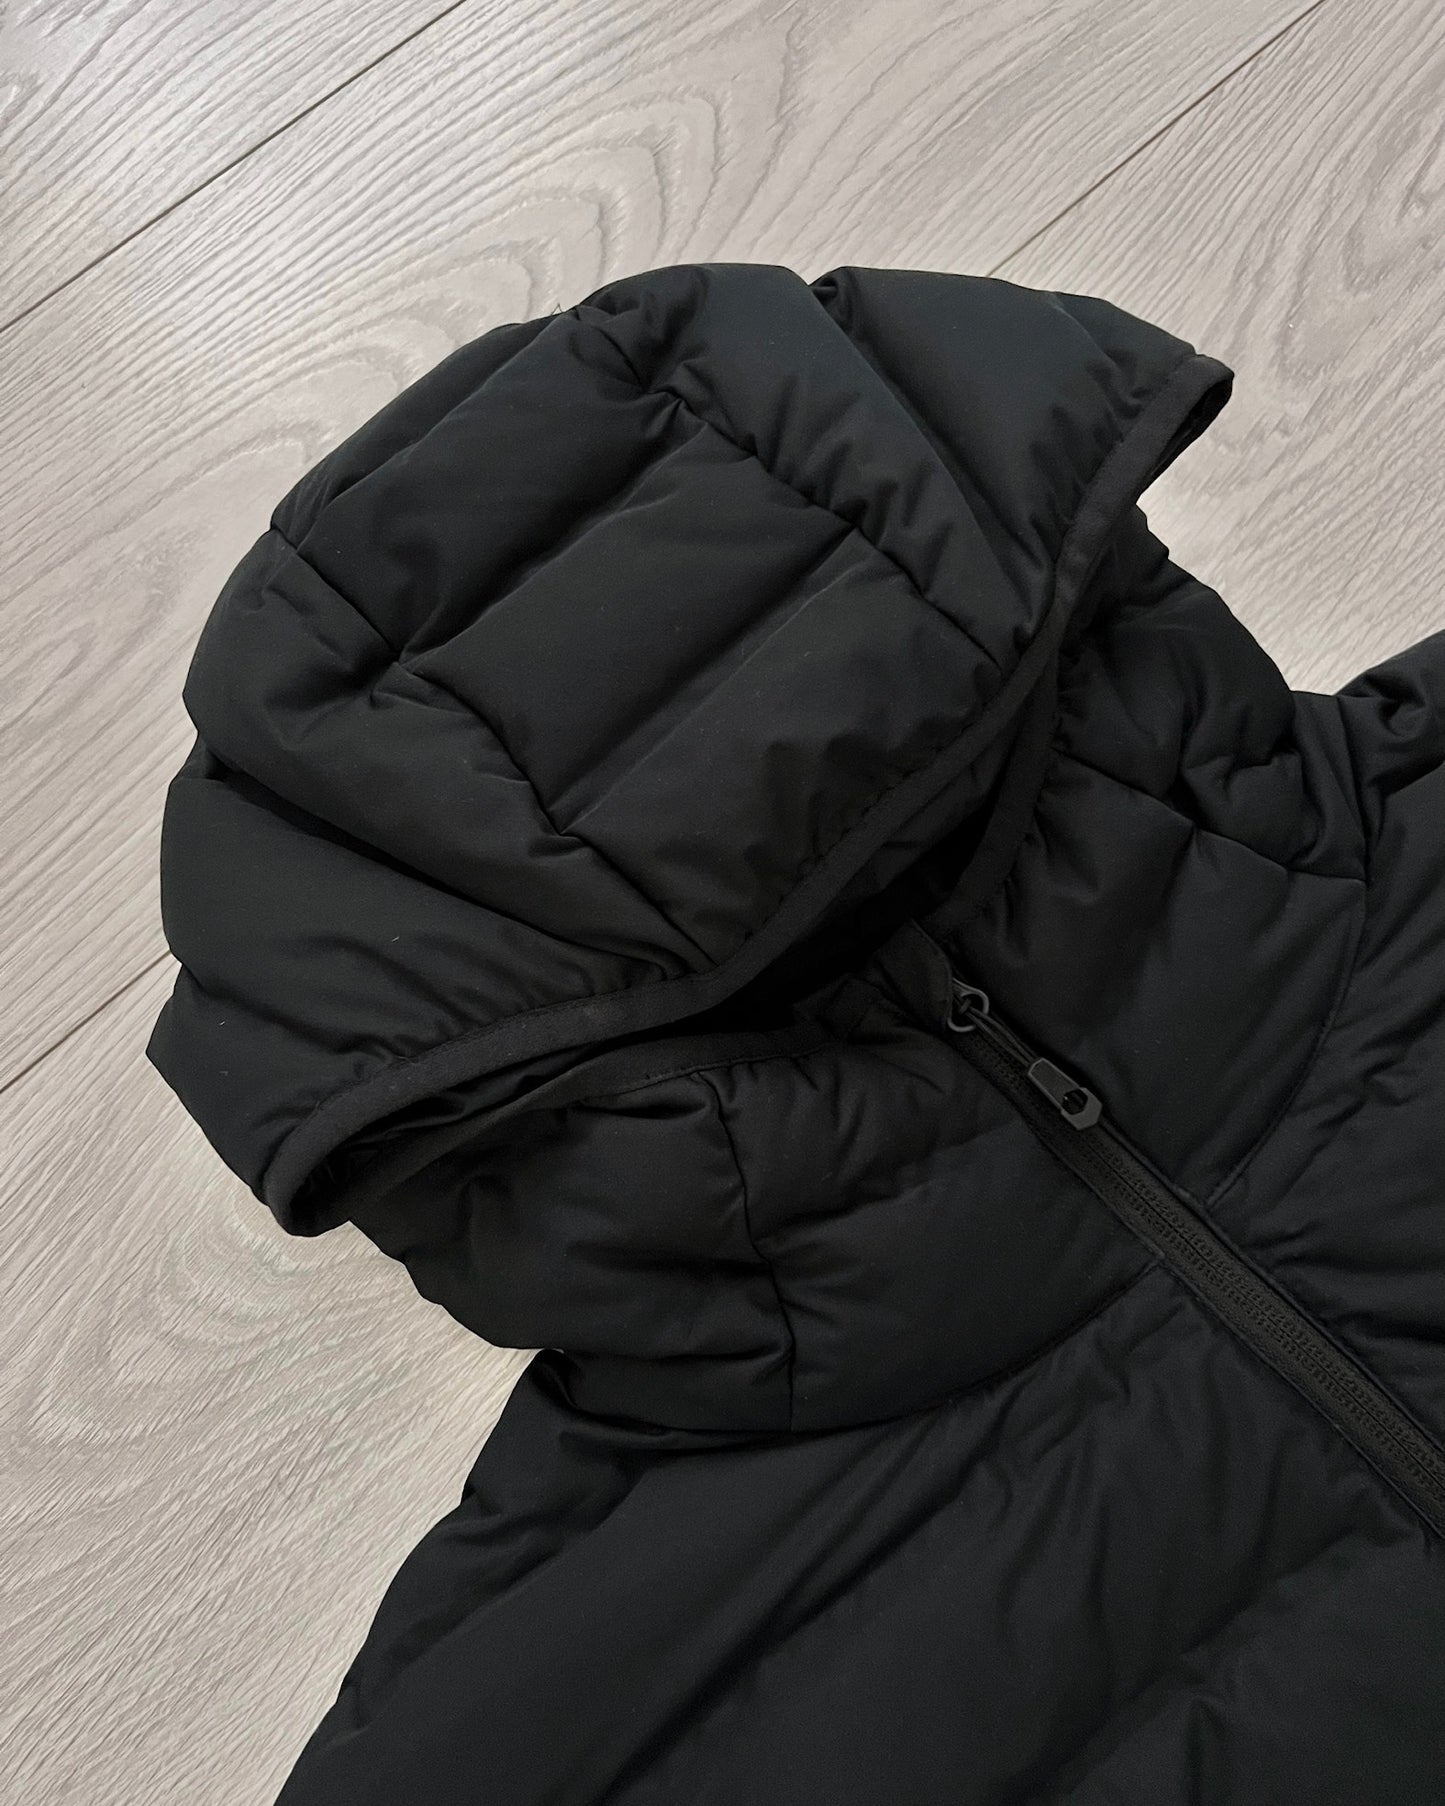 Mountain Hardwear Pertex Quantum Shield 750 Down Puffer Jacket - Size XL